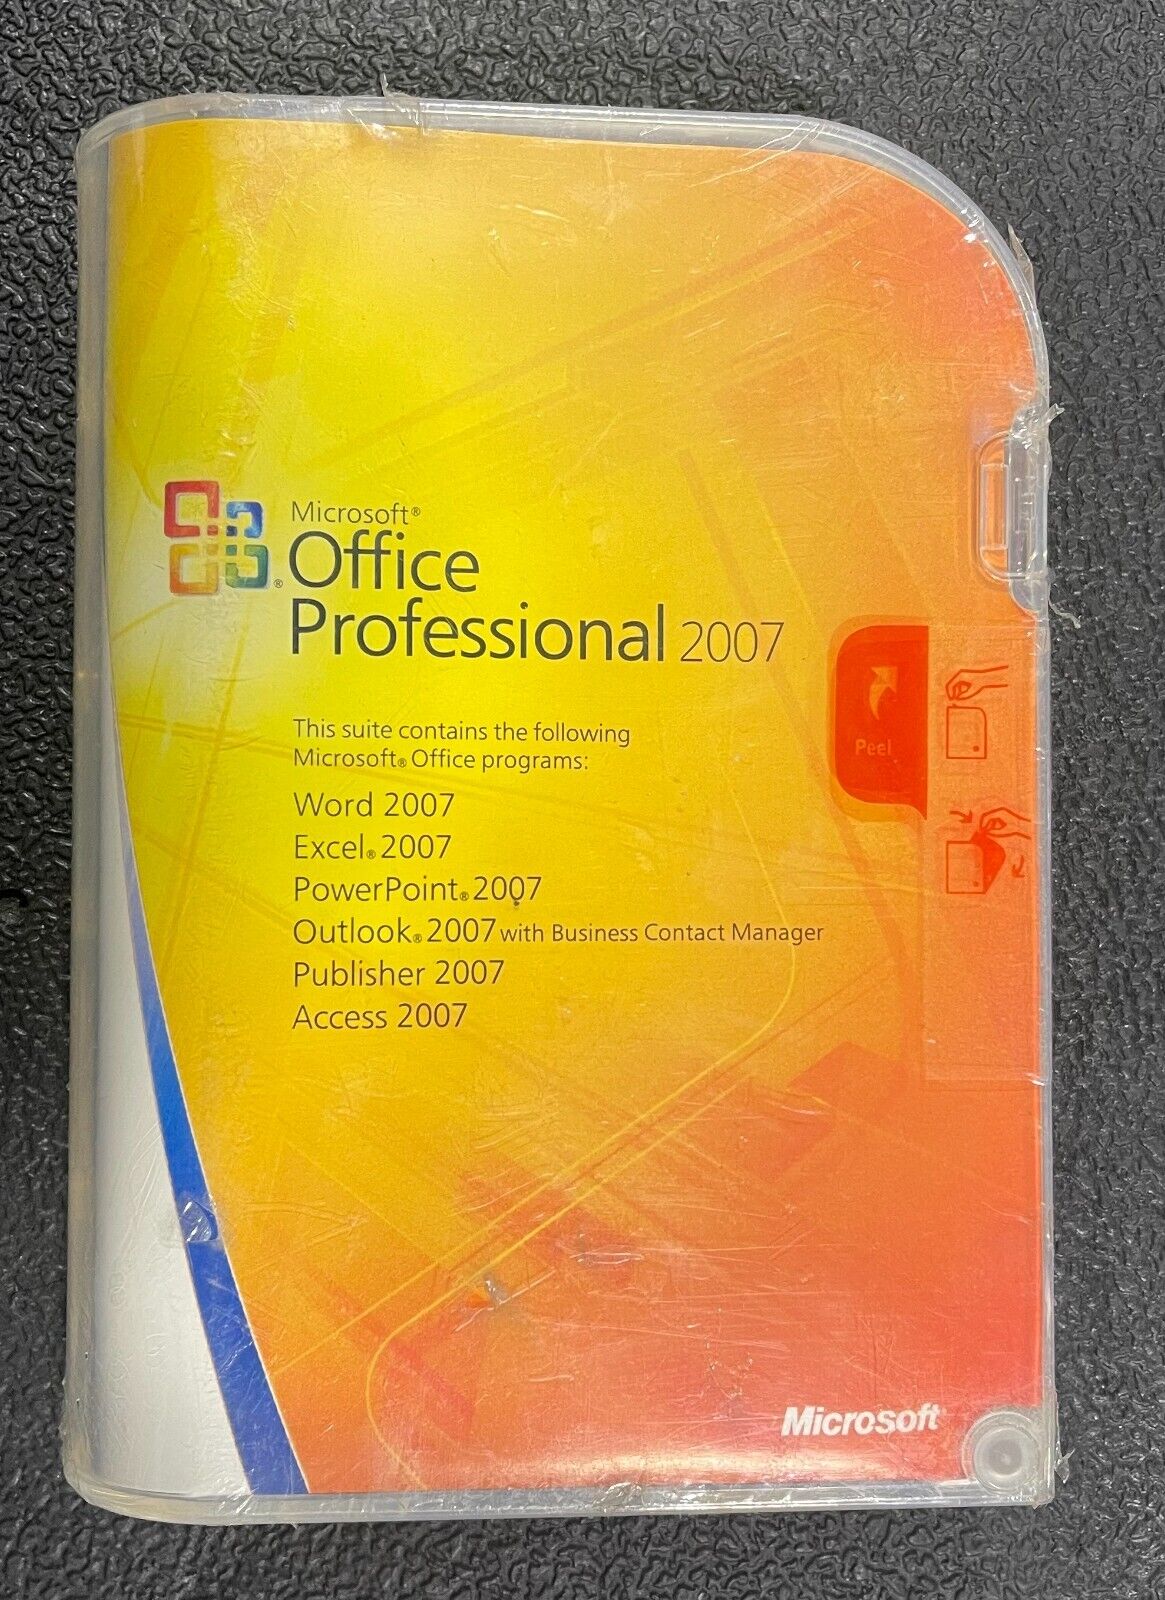 Microsoft Office 2007 Professional Full English Retail new sealed